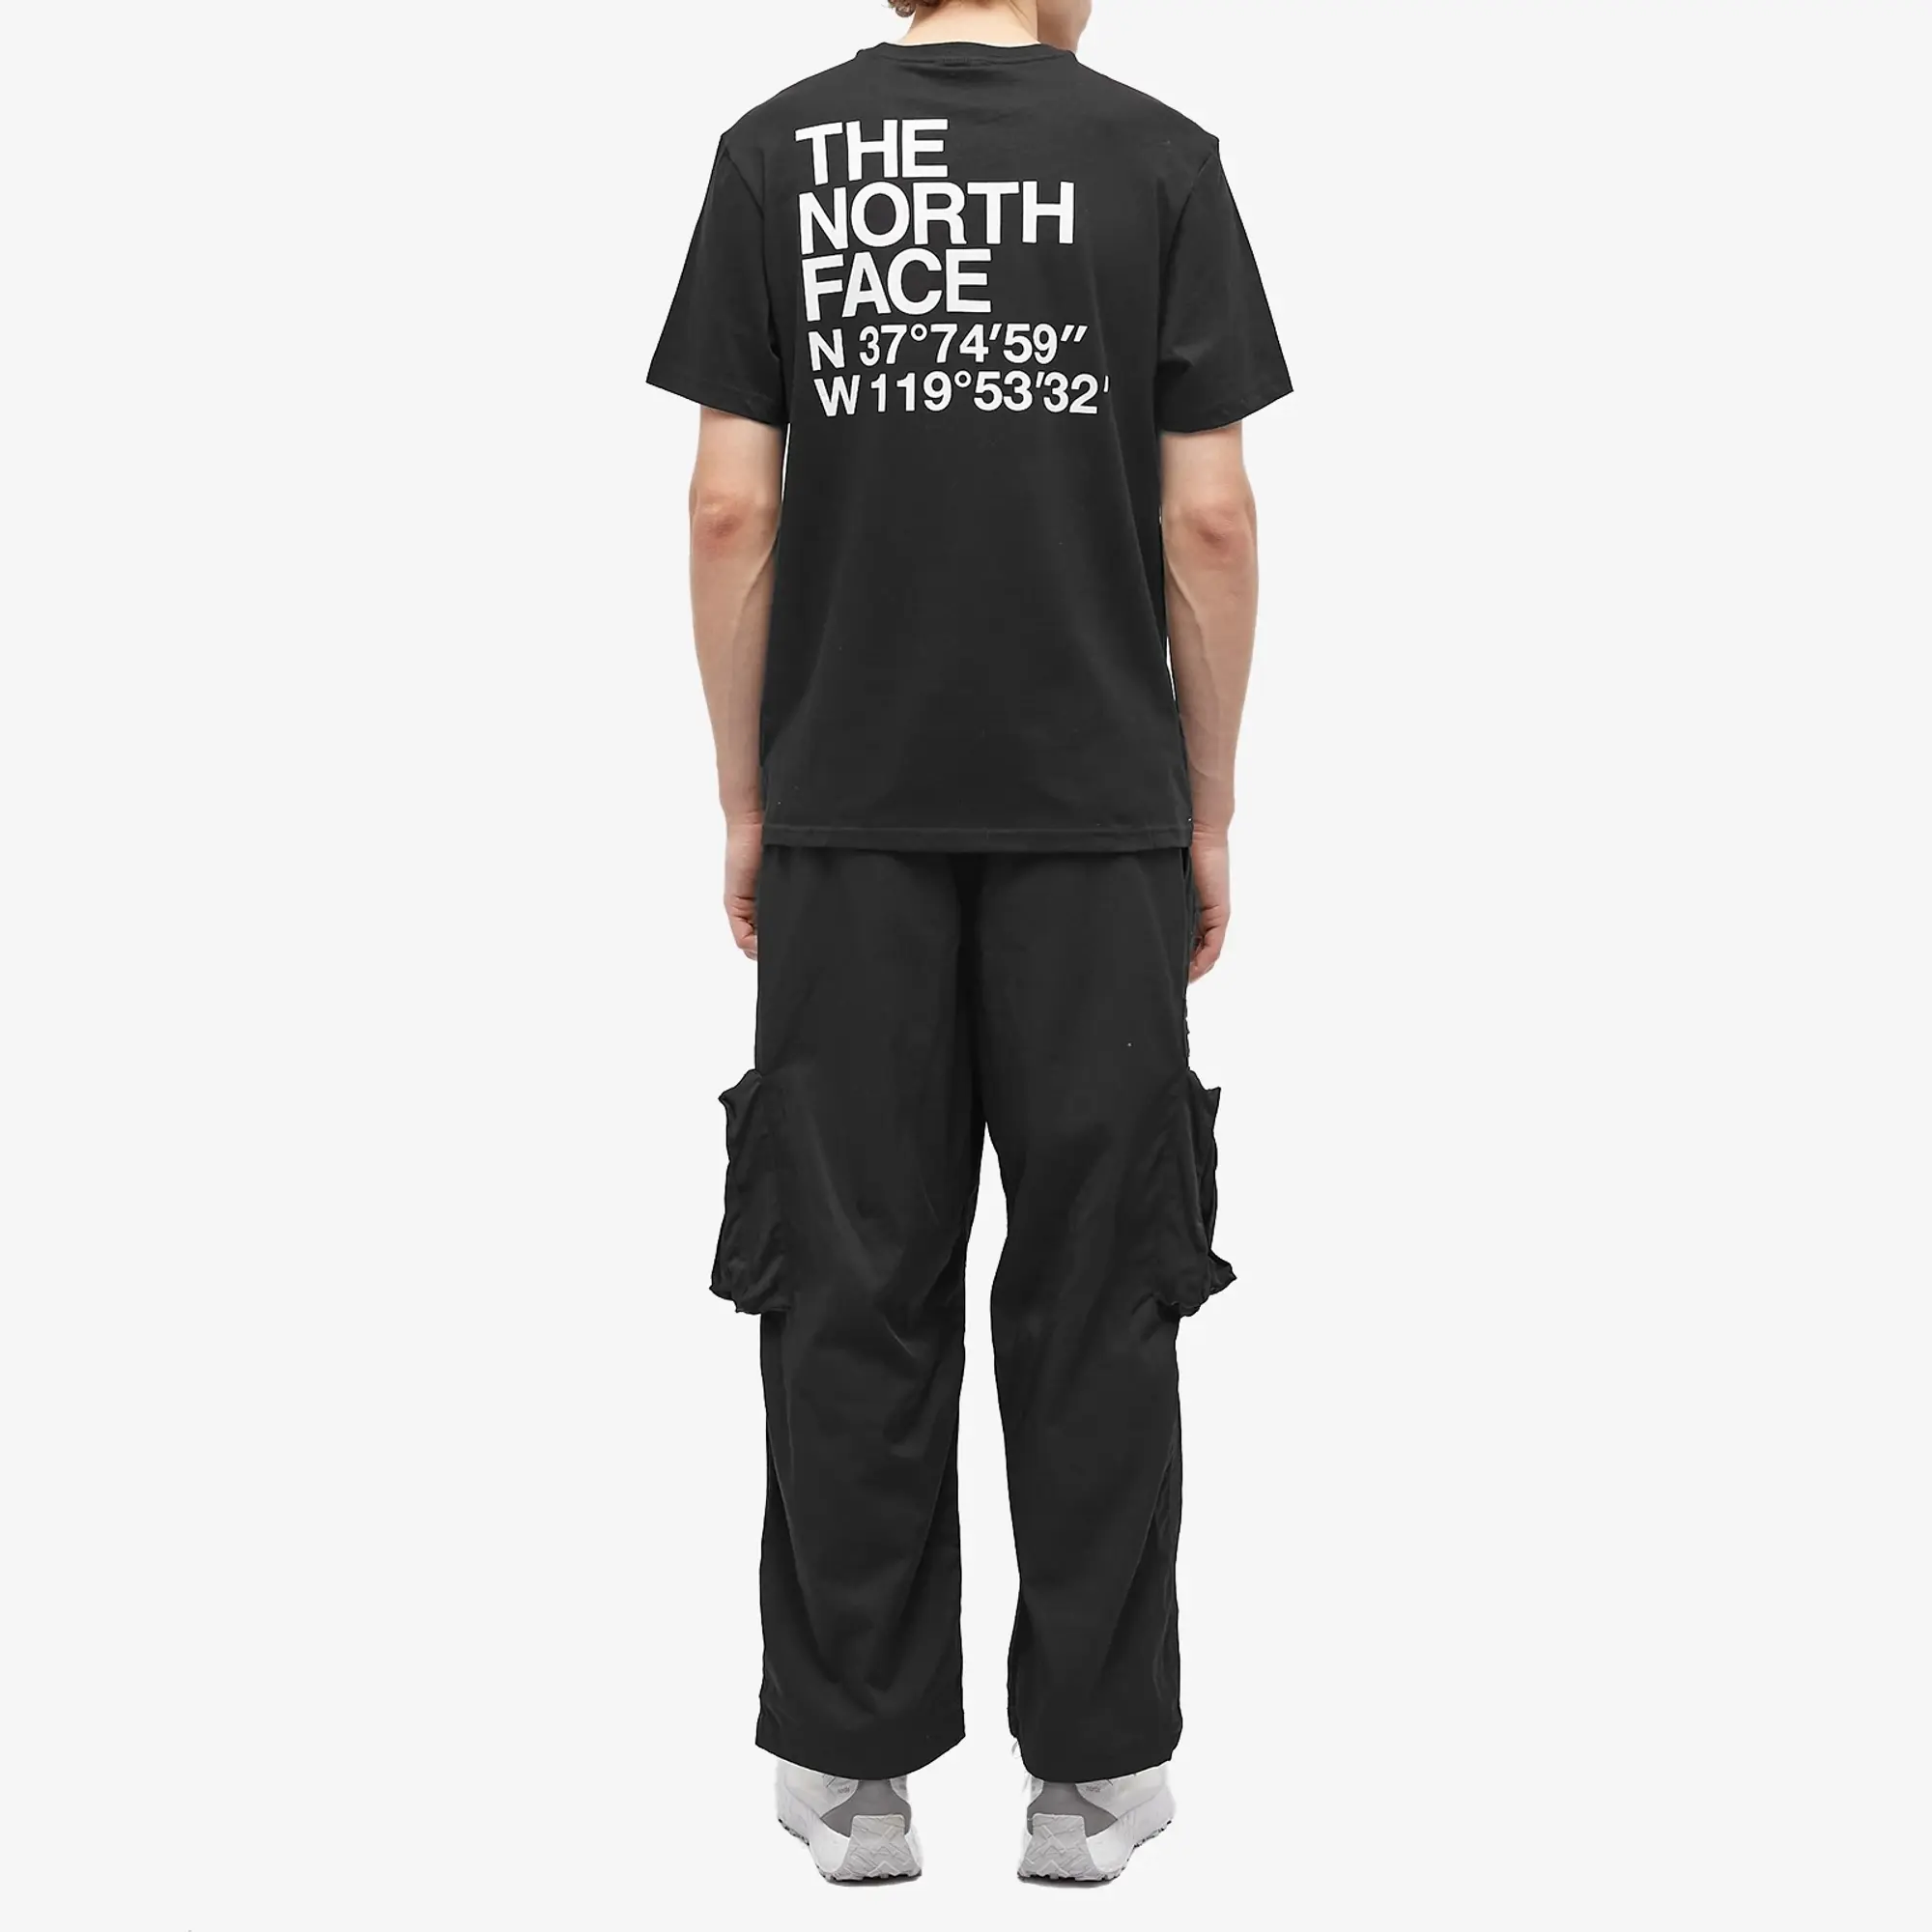 The North Face Coordinates T-Shirt, Black